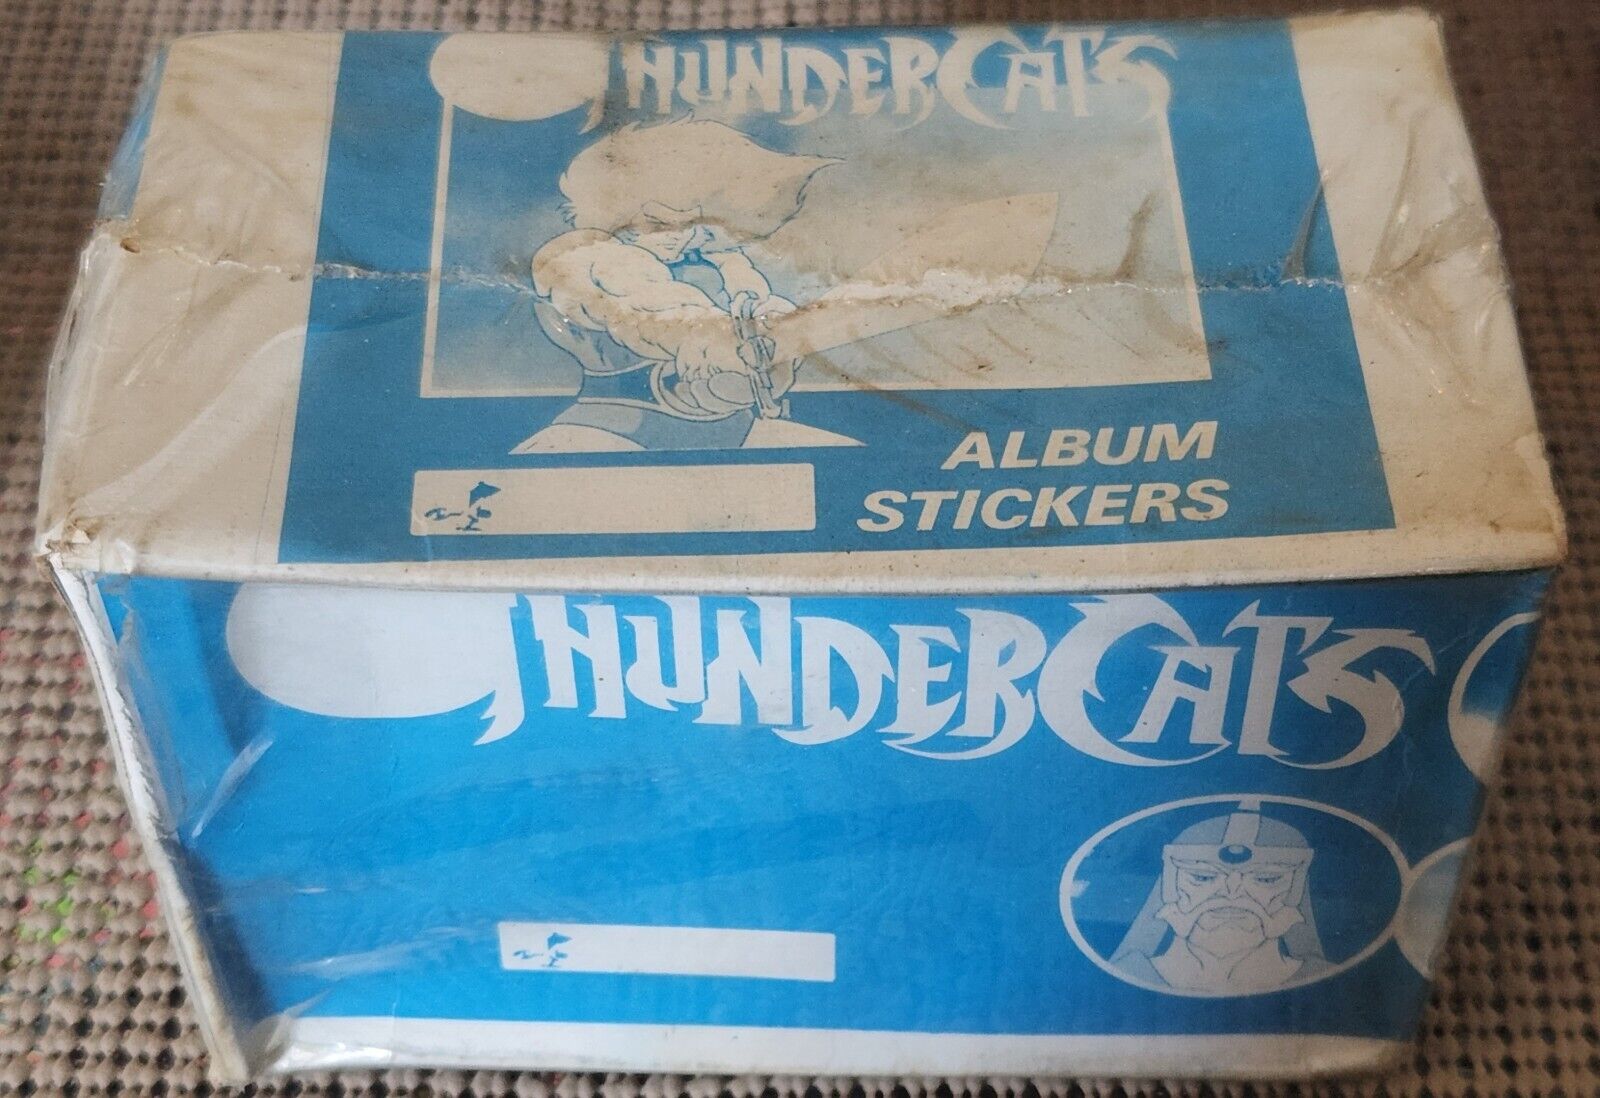 FULL BOX: 1986 Thundercats (200 UNOPENED/SEALED PACKS) for Panini Album Stickers